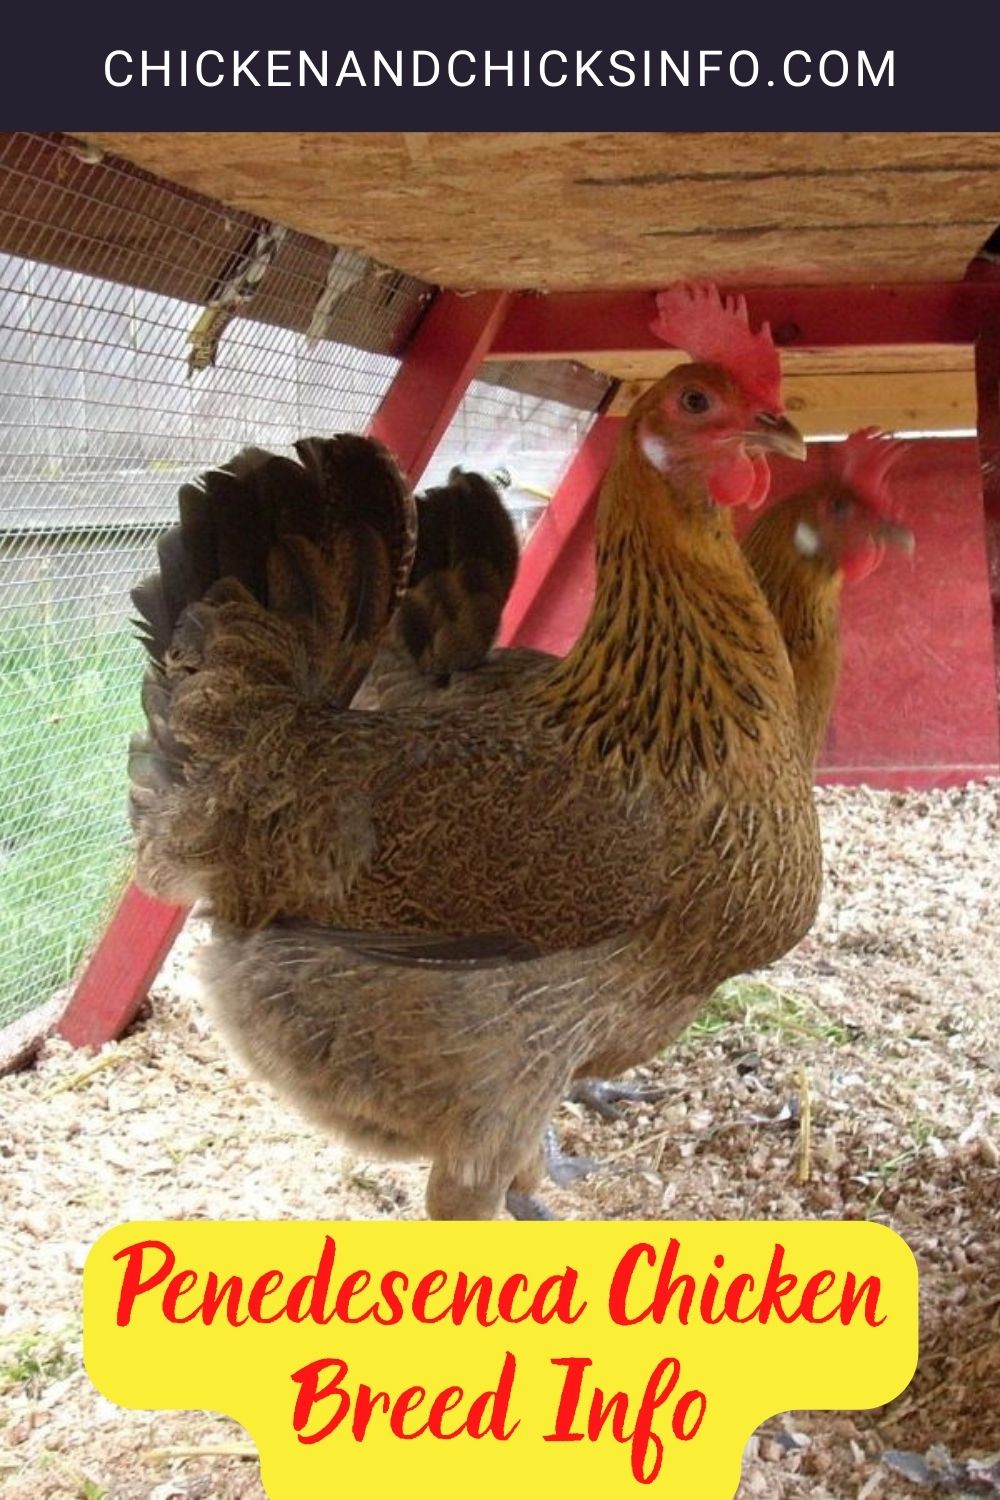 Penedesenca Chicken Breed Info pinterest image.